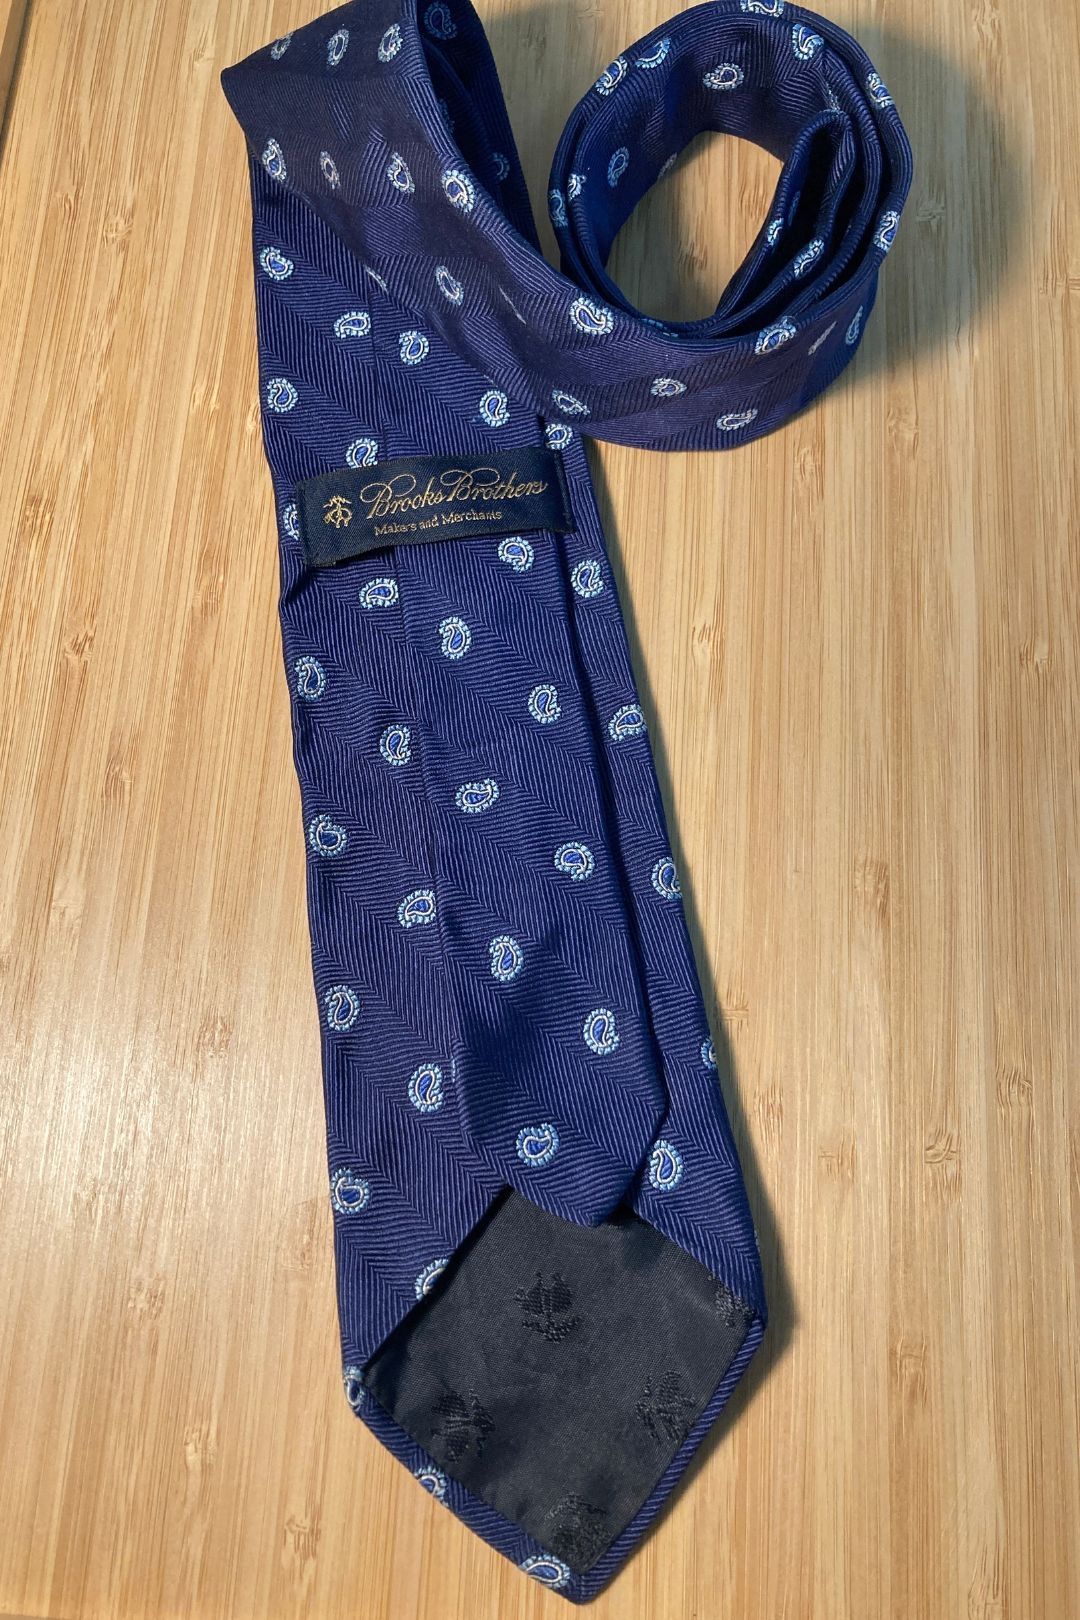 Classic Navy Silk Amoeba Tie